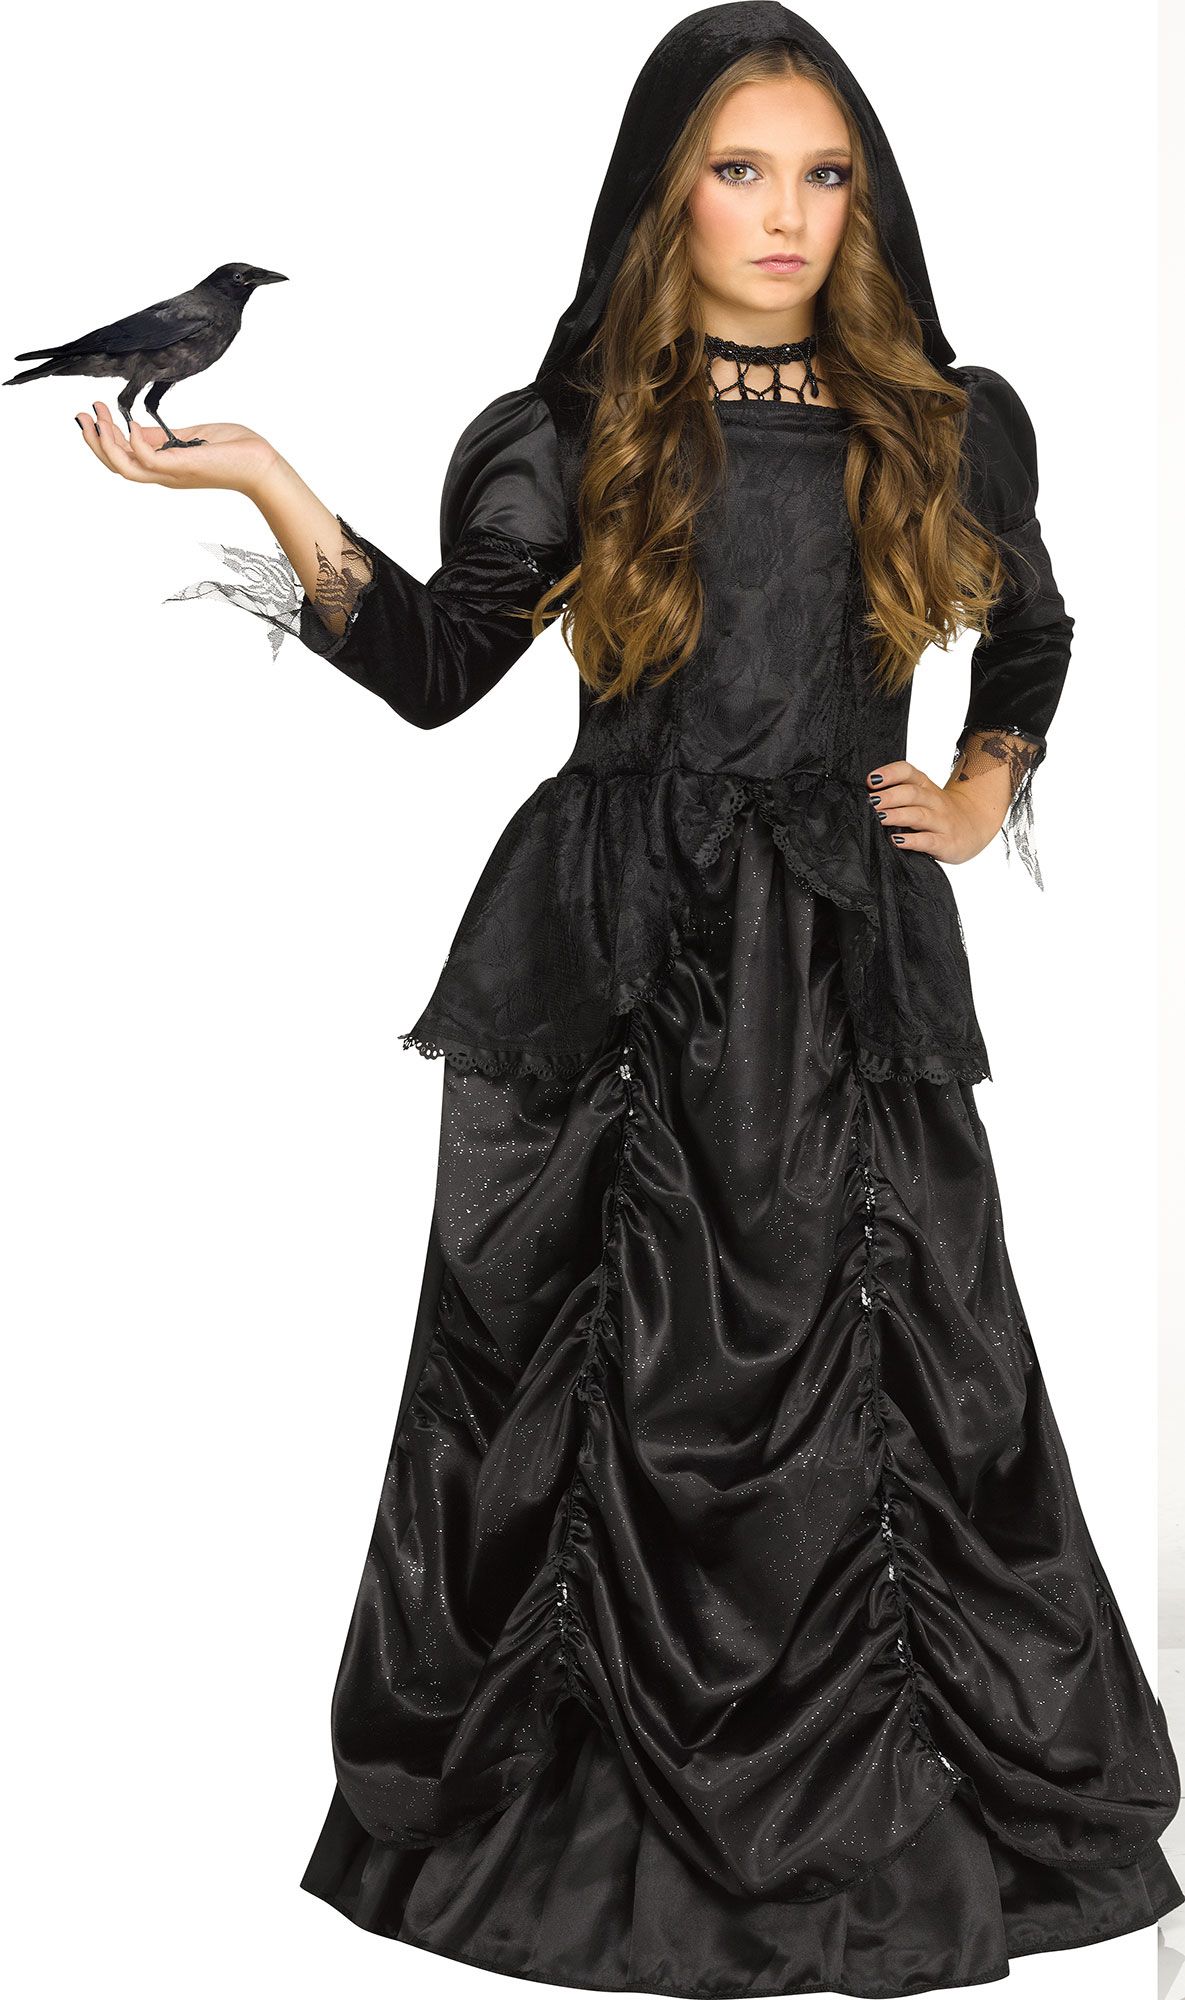 Wicked Queen Child Costume